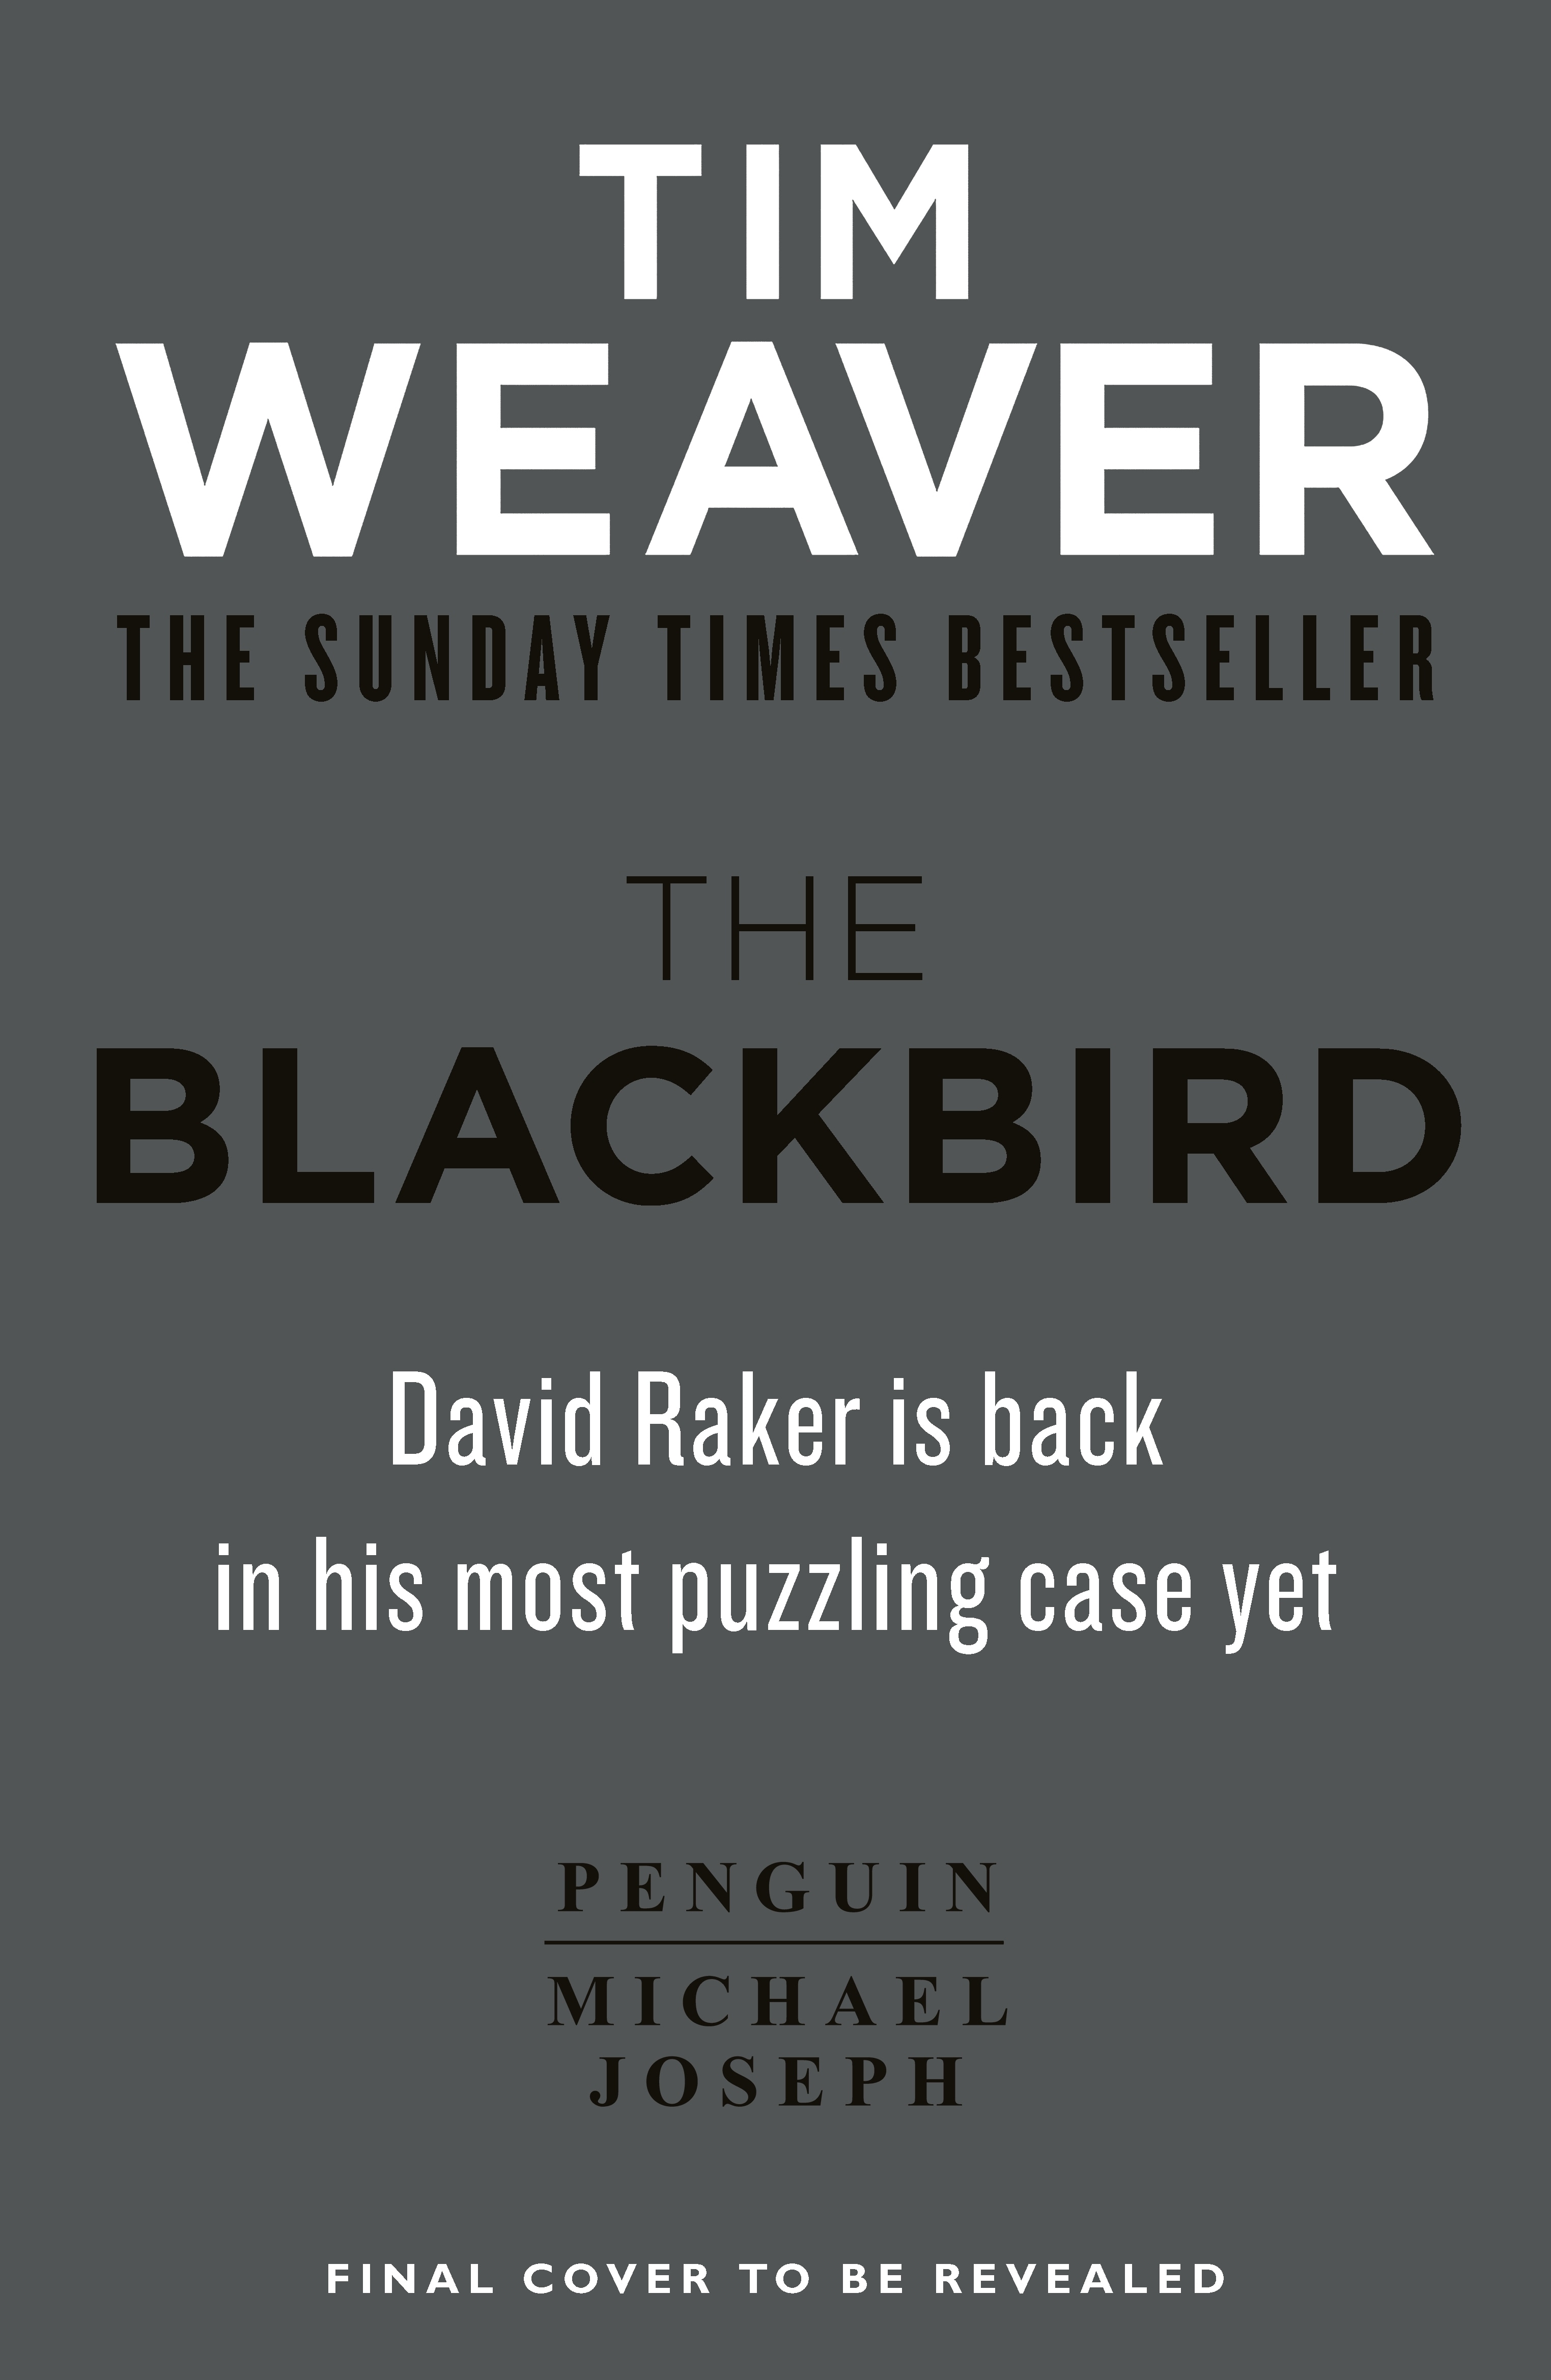 Book “The Blackbird” by Tim Weaver — March 31, 2022